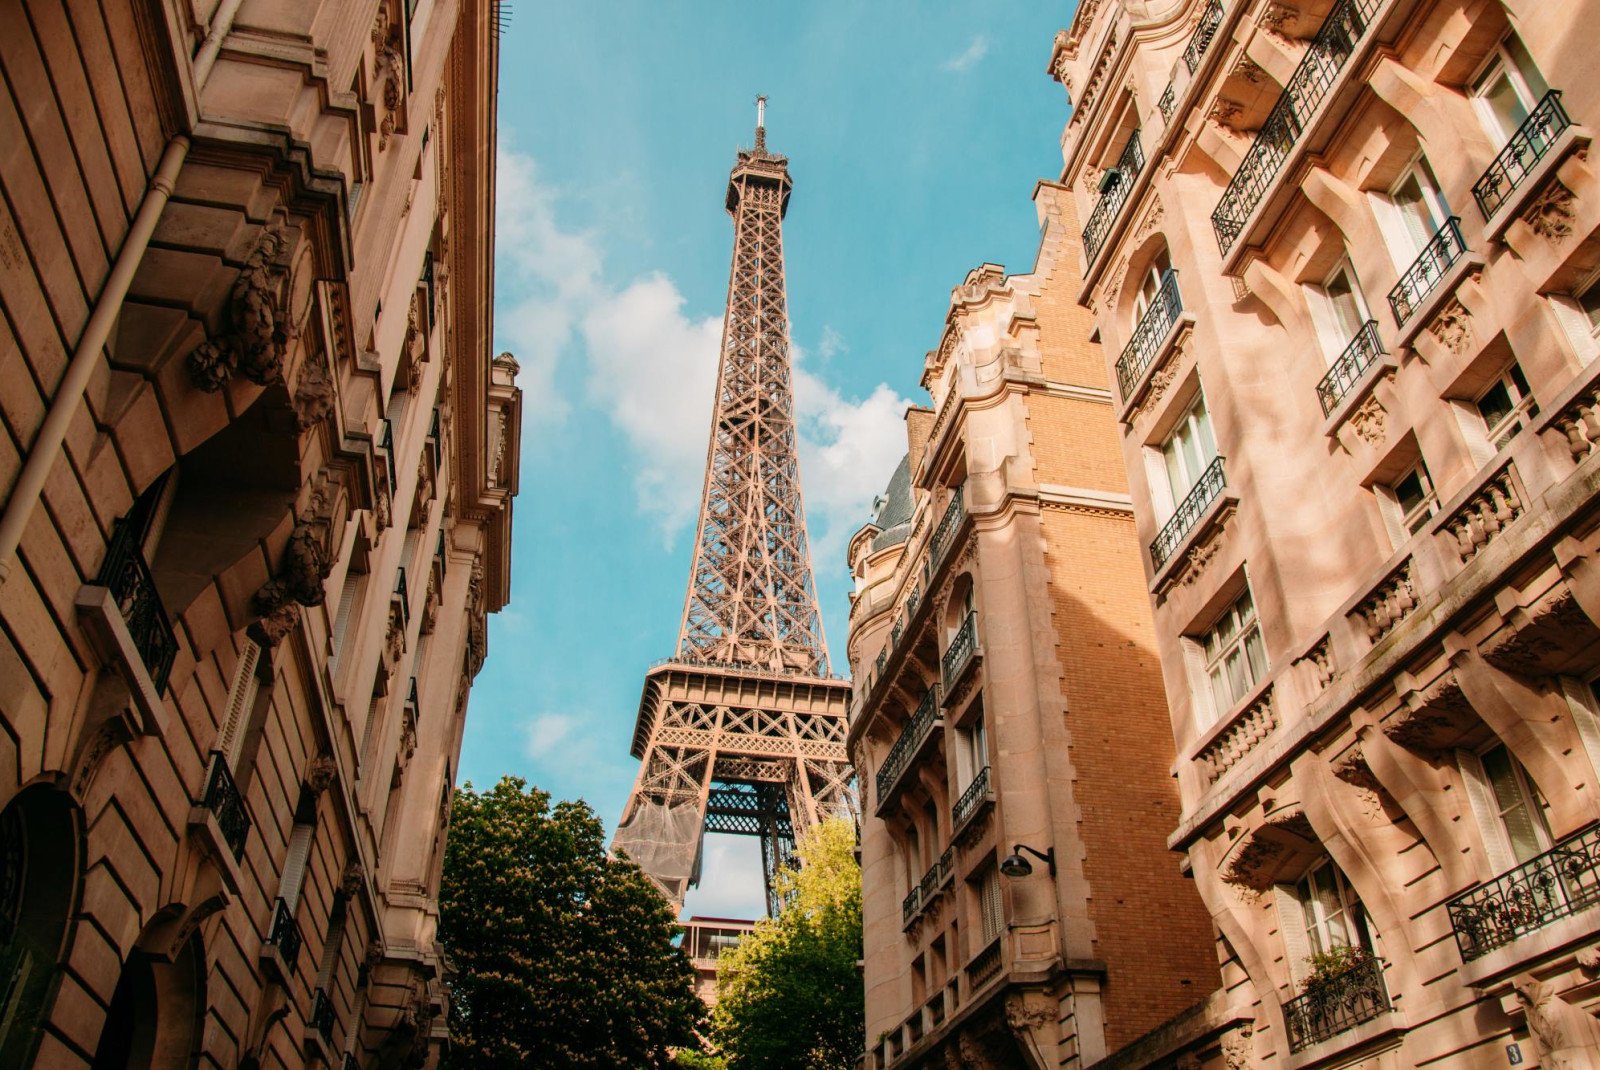 Eiffel Tower peeking through narrow street in Paris.